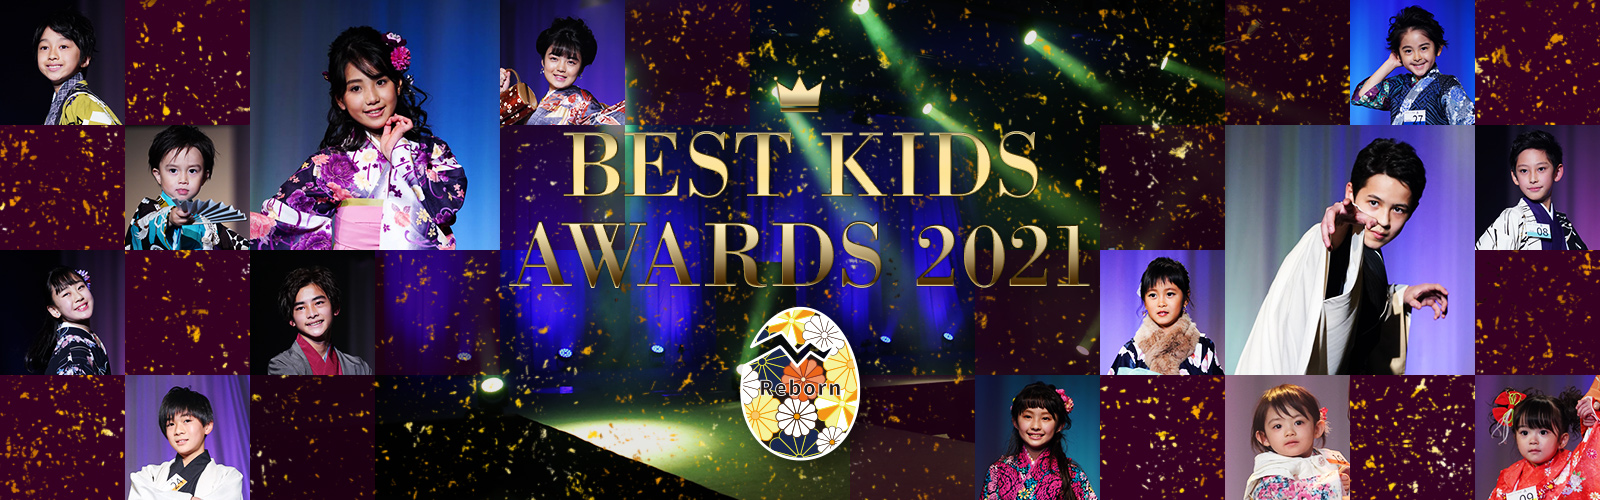 BEST KIDS AWARDS 2021